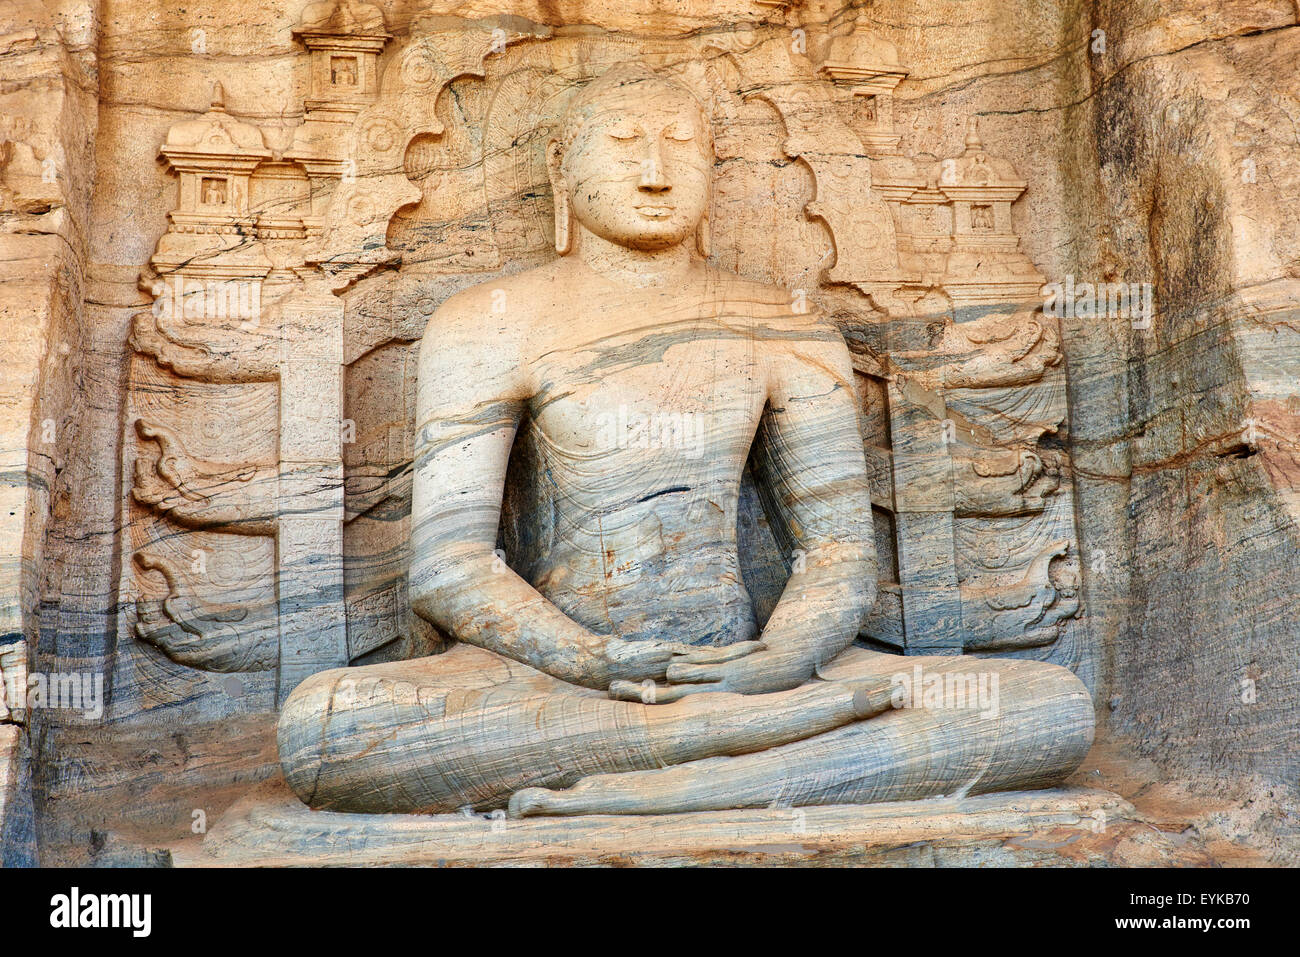 Sri Lanka, Ceylon, North Central Province, ancient city of Polonnaruwa, UNESCO World Heritage Site, Gal Vihara, sitting Buddha Stock Photo